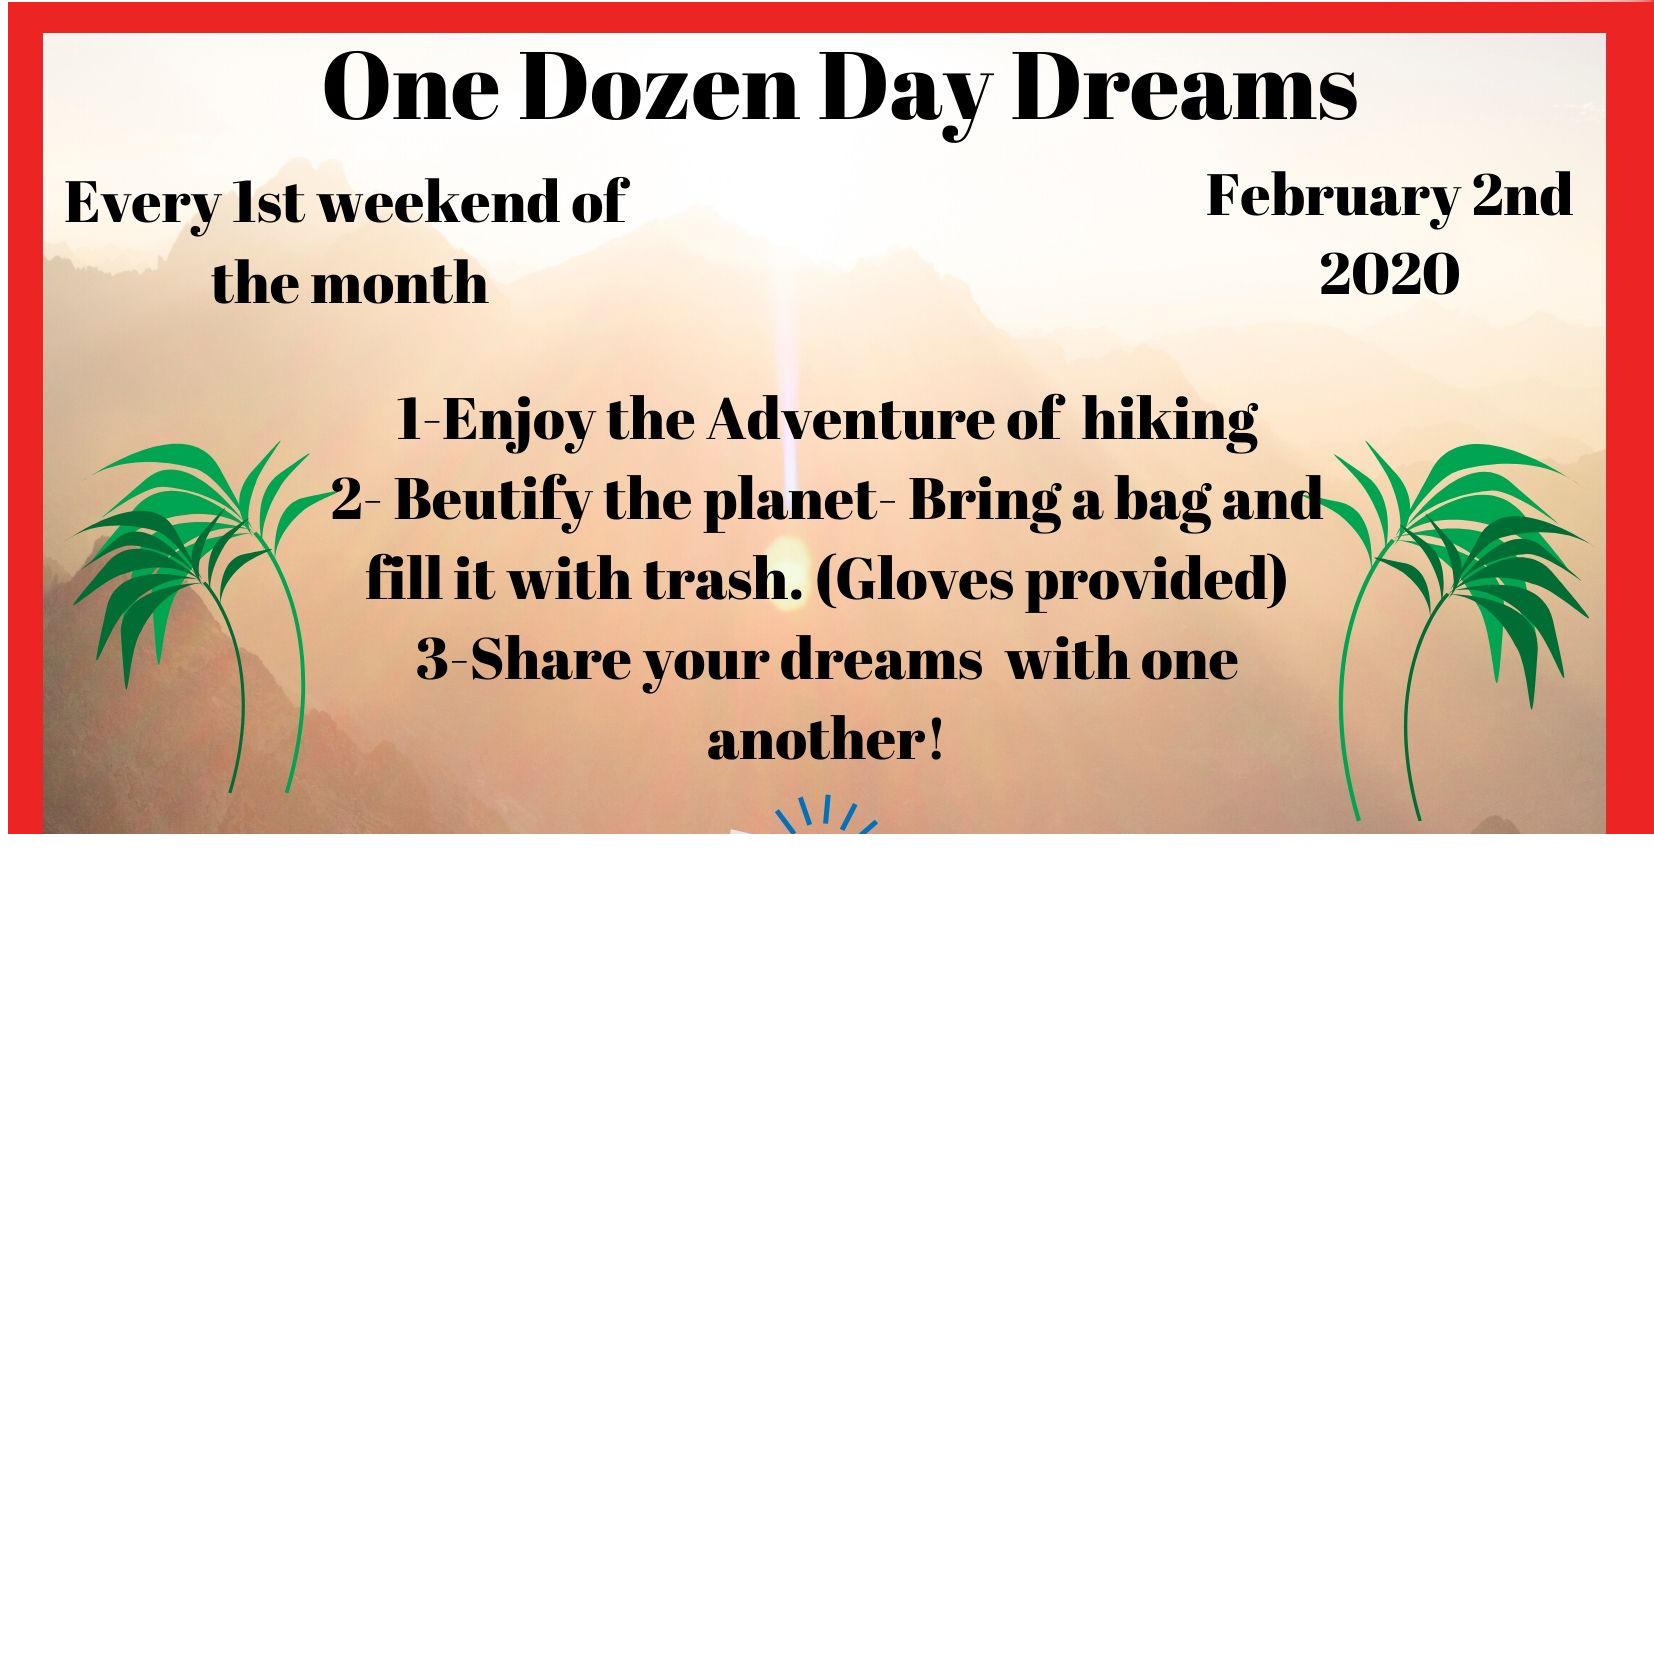 One Dozen Day Dreams